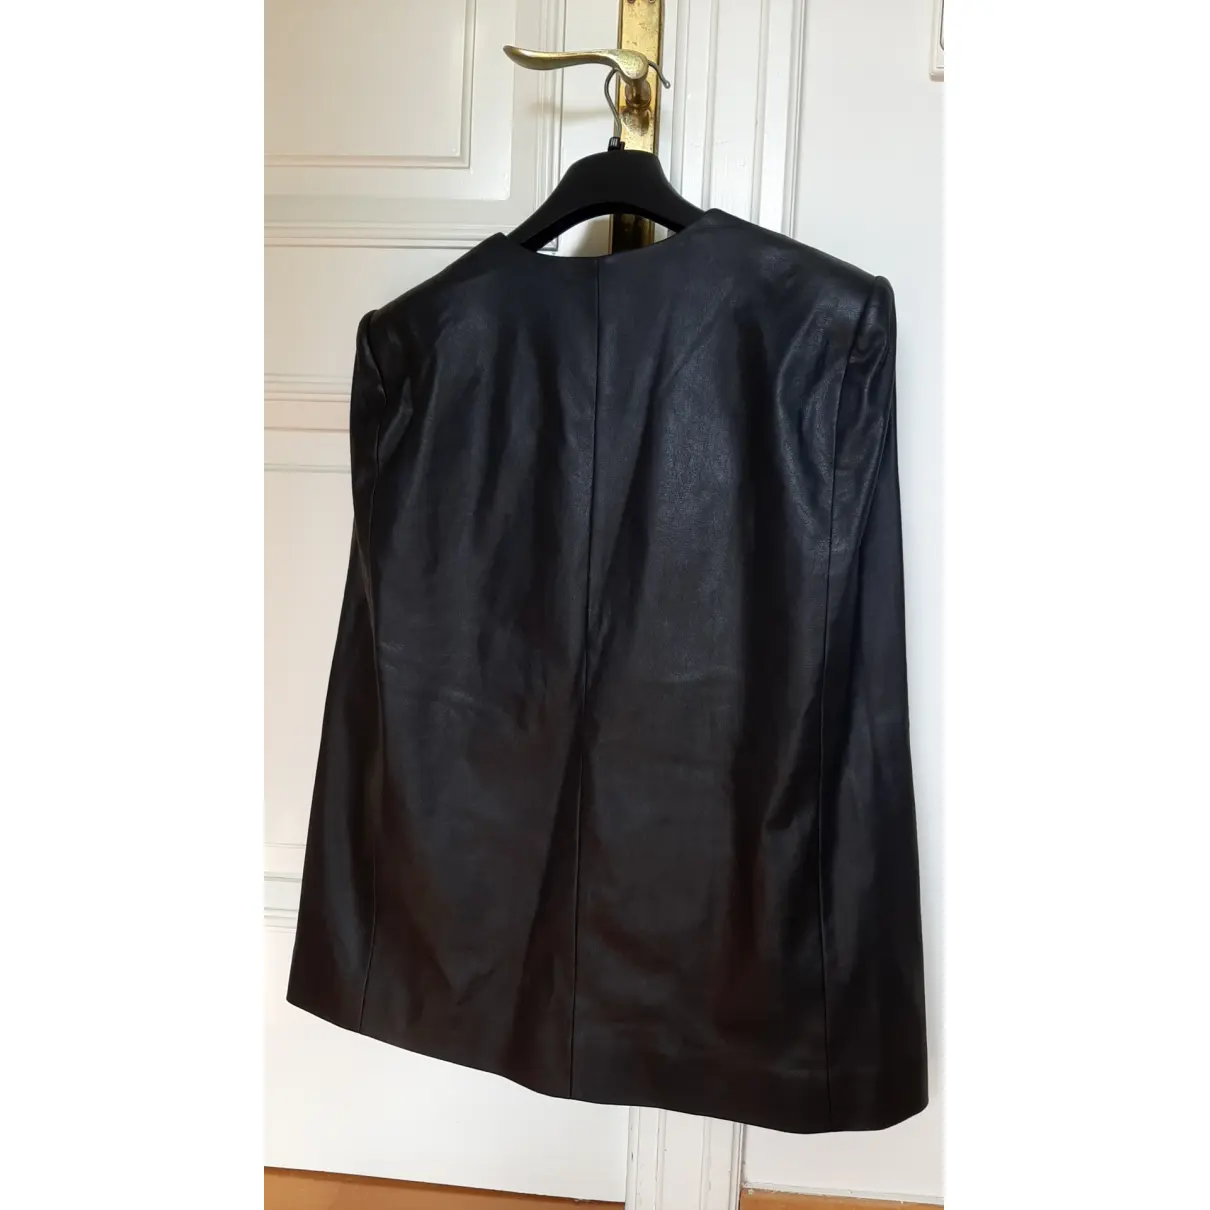 Buy Bcbg Max Azria Leather jacket online